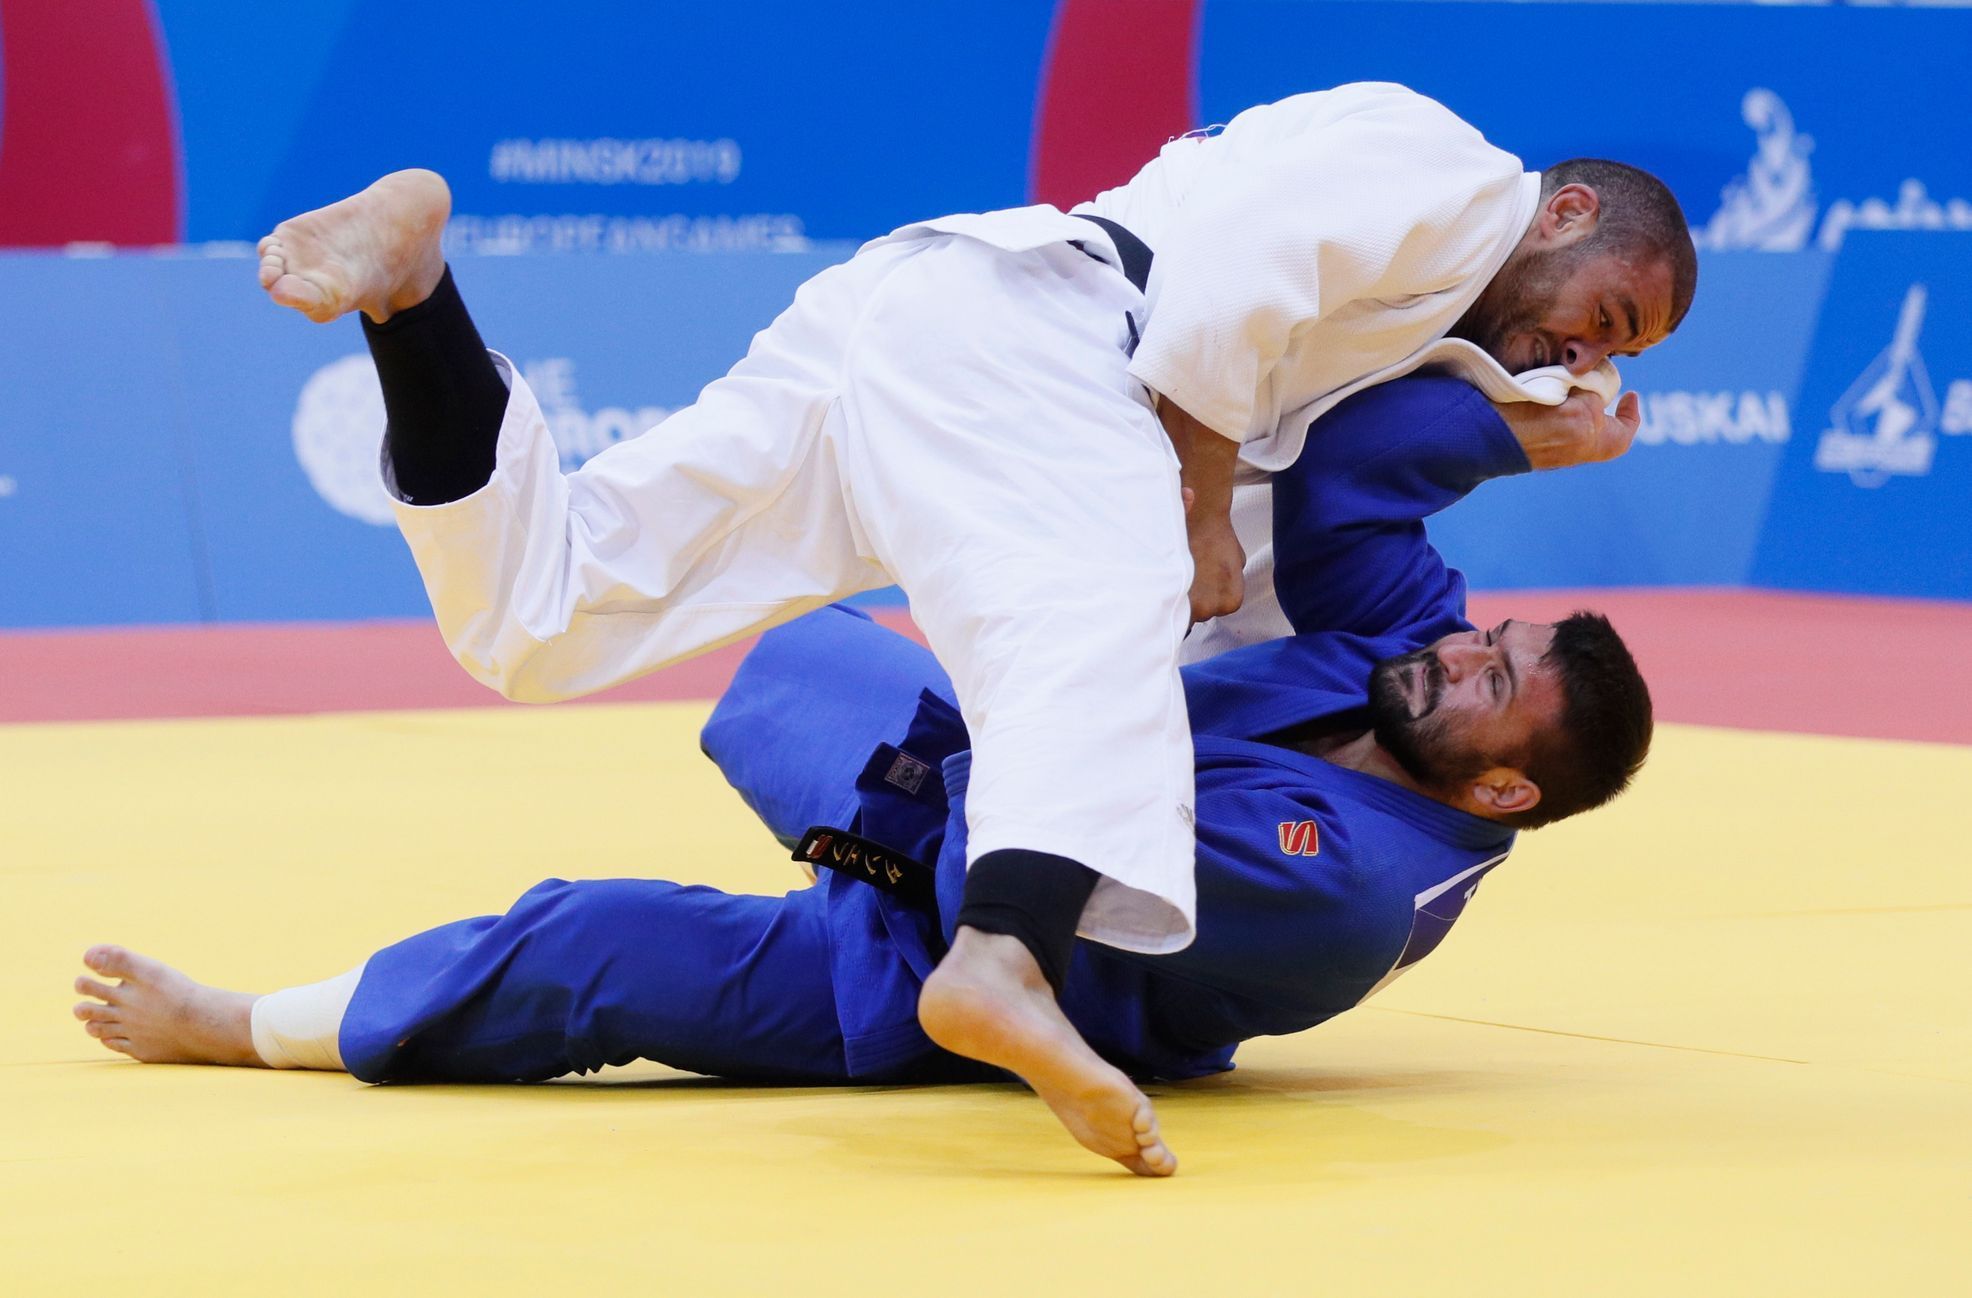 2019 European Games - Judo - Men's Heavy Weight +100kg